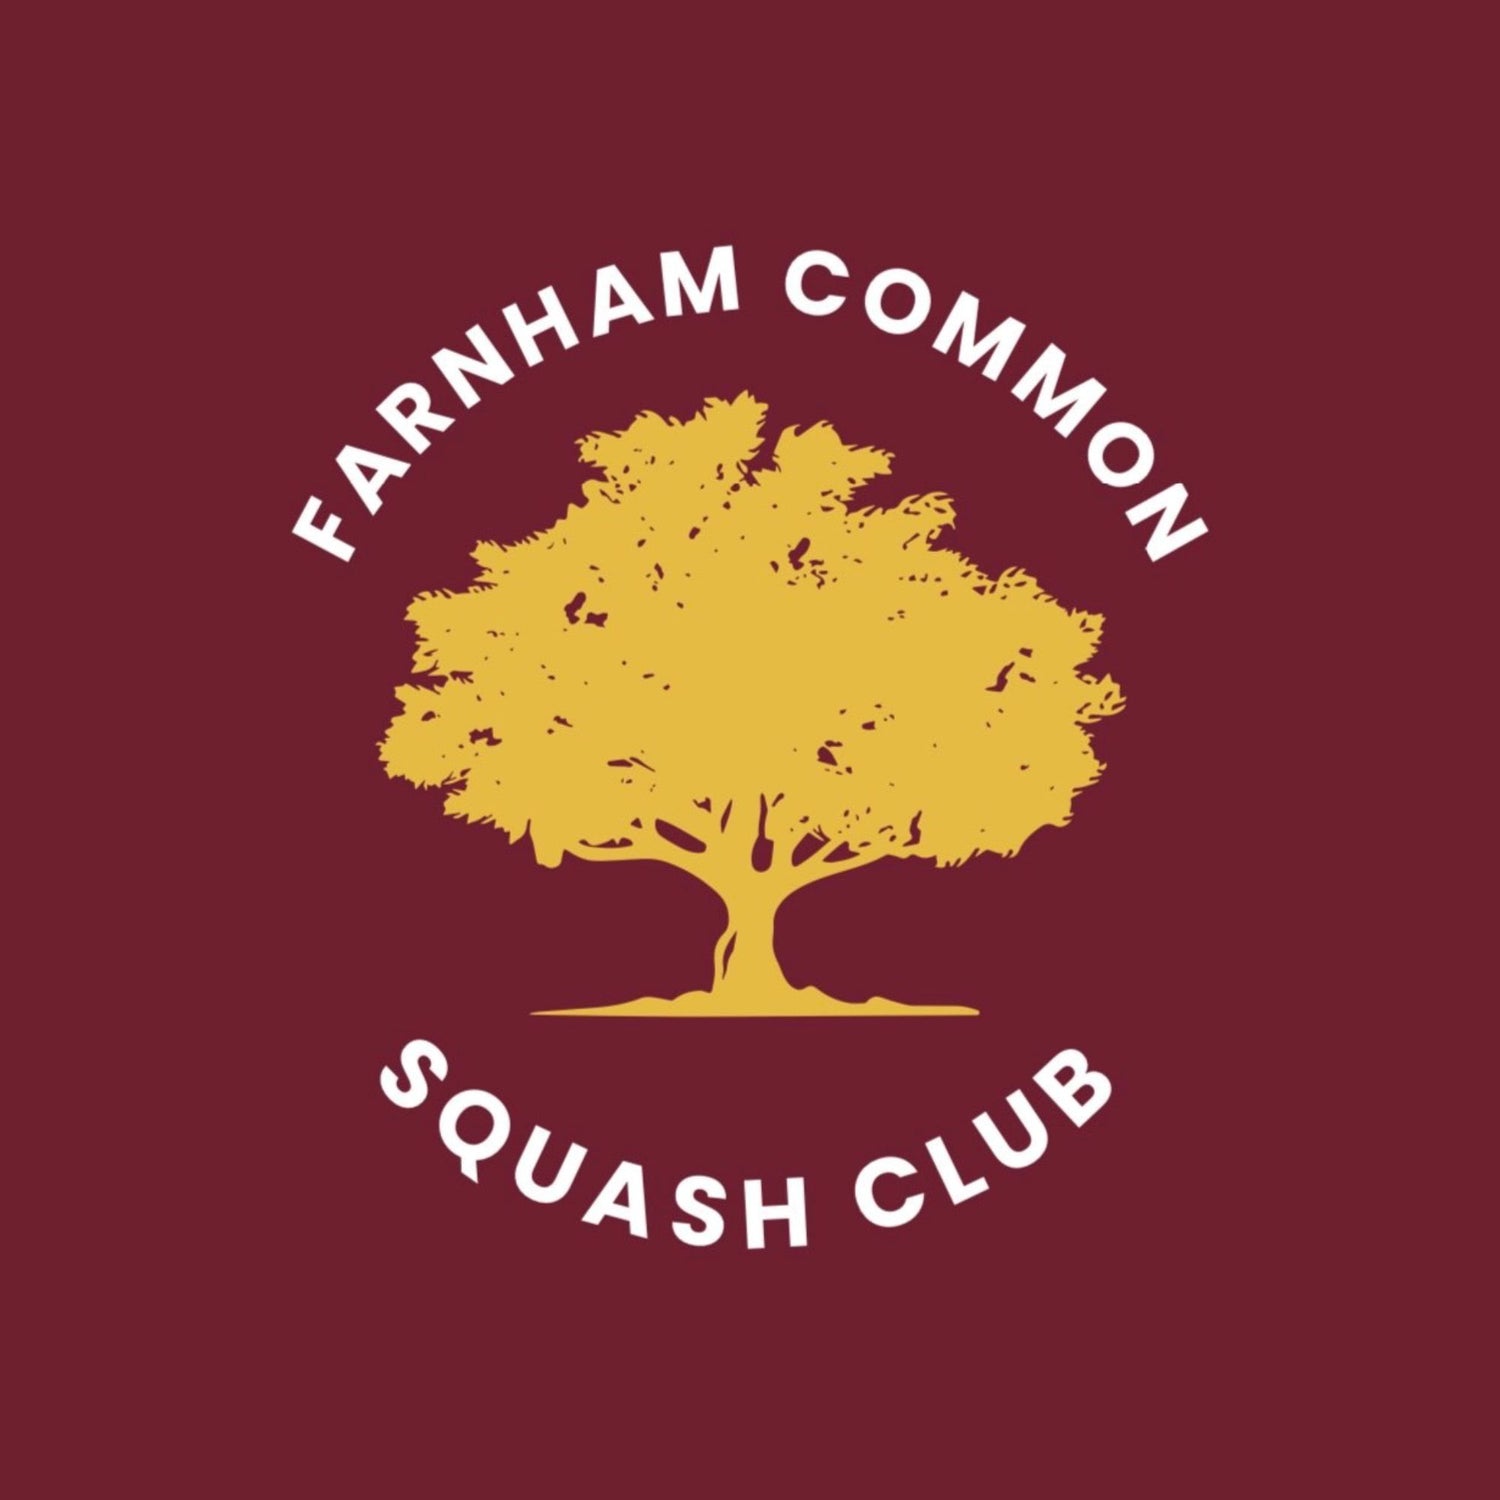 Farnham Common Squash Club